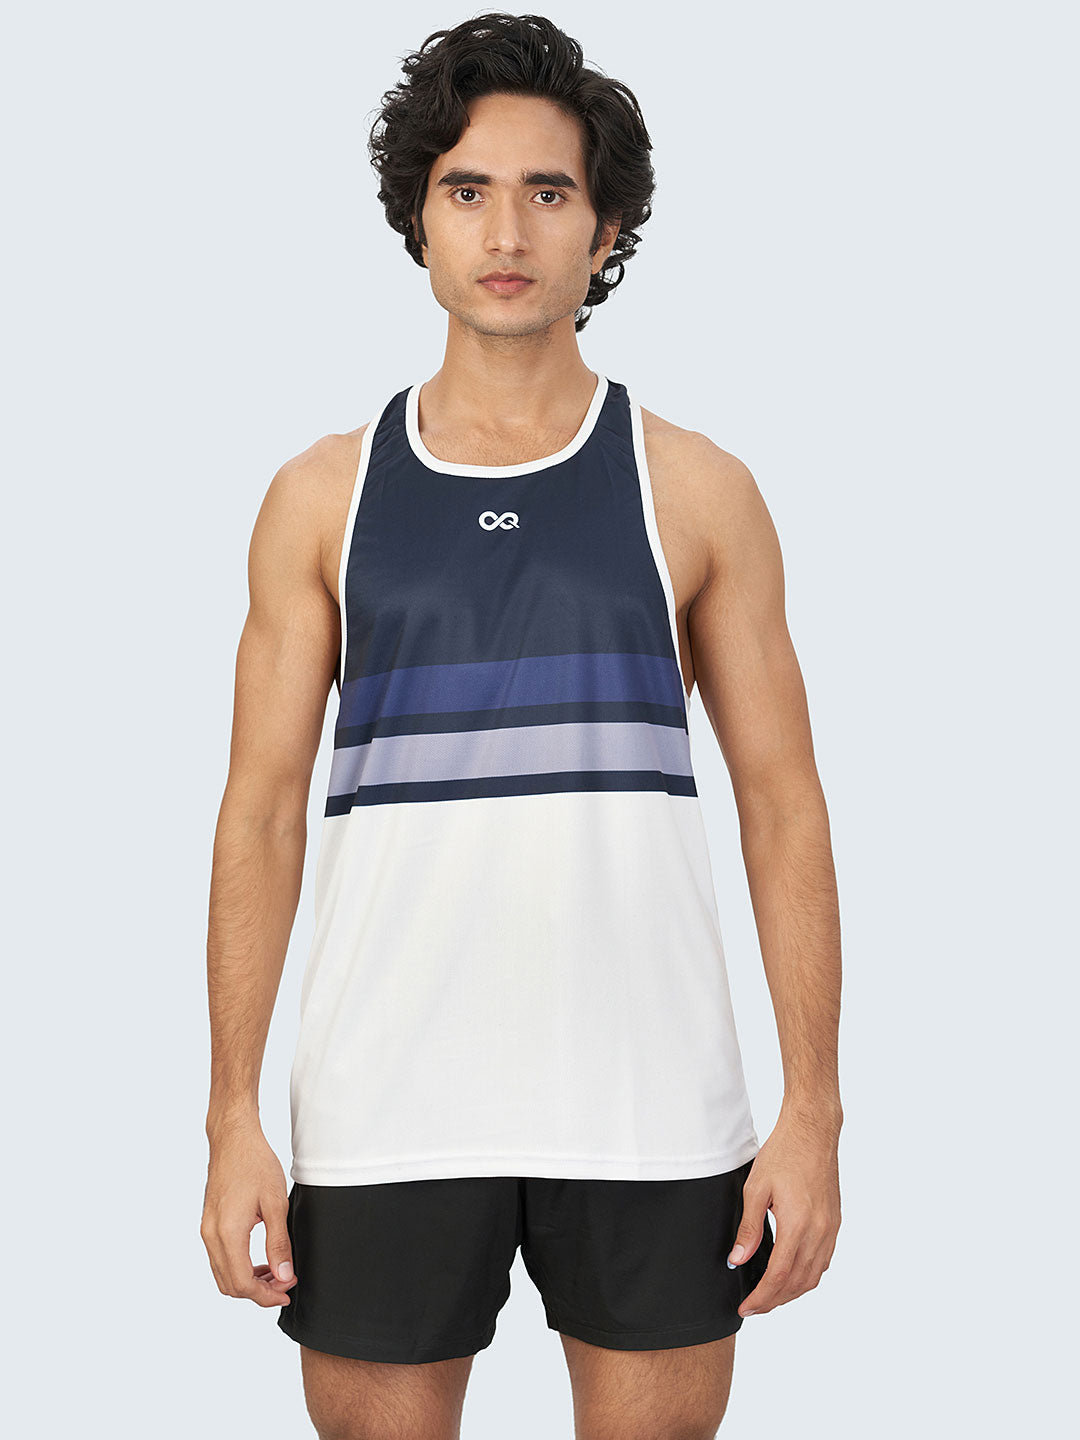 Buy Hivata Gym Vest for Men & Boys Sports Running Cotton